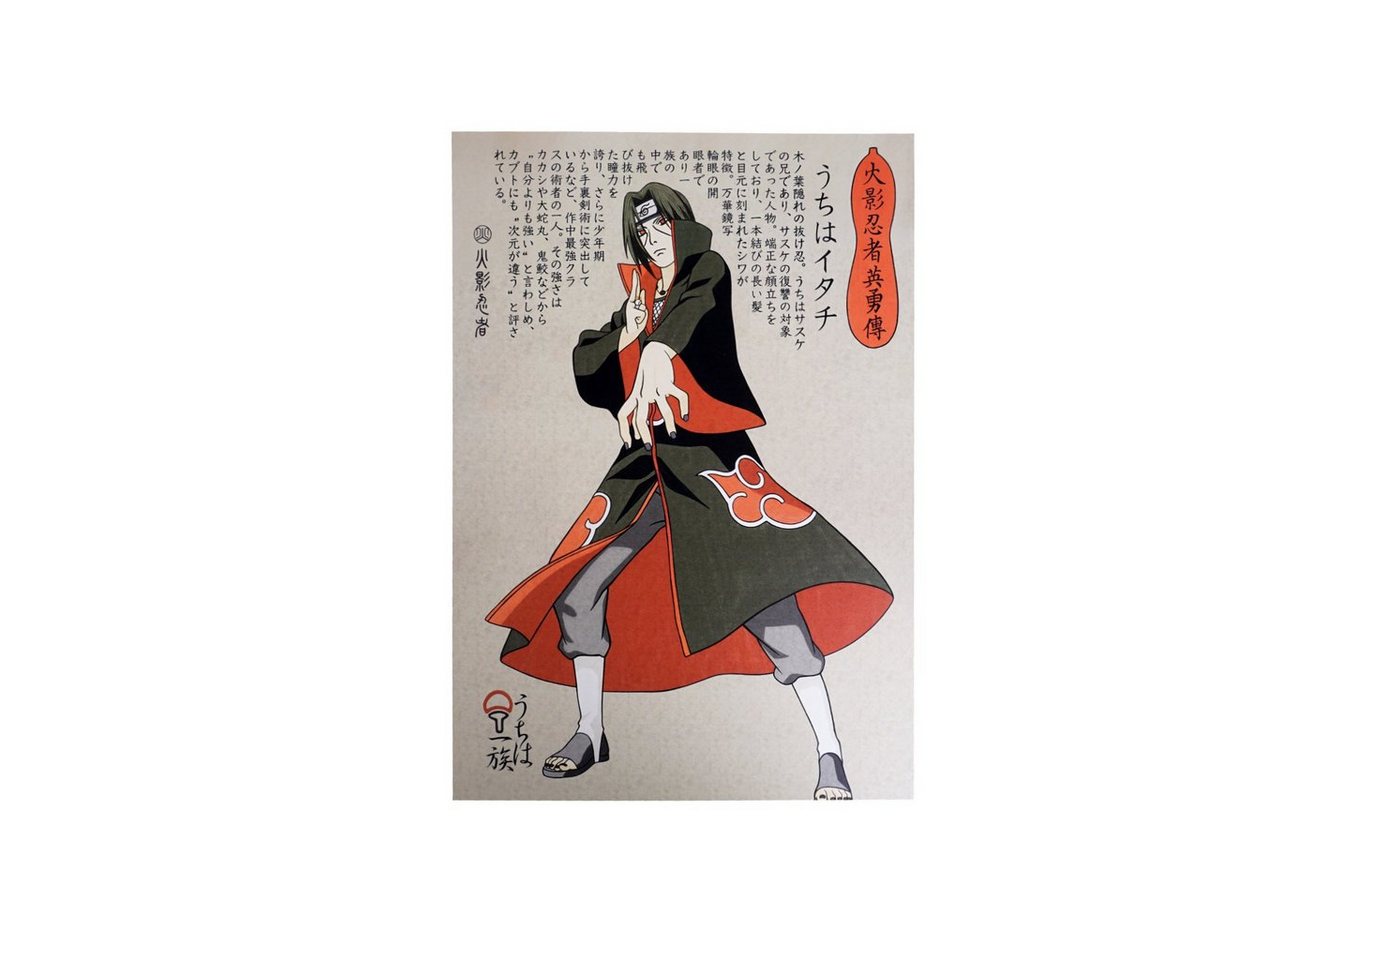 GalaxyCat Poster Hochwertiges Shinobi Wandbild, Anime Ninja auf Hartschaumplatte, Uchiha Itachi, Farbdruck auf Hartschaumplatte, japanische Schrift von GalaxyCat